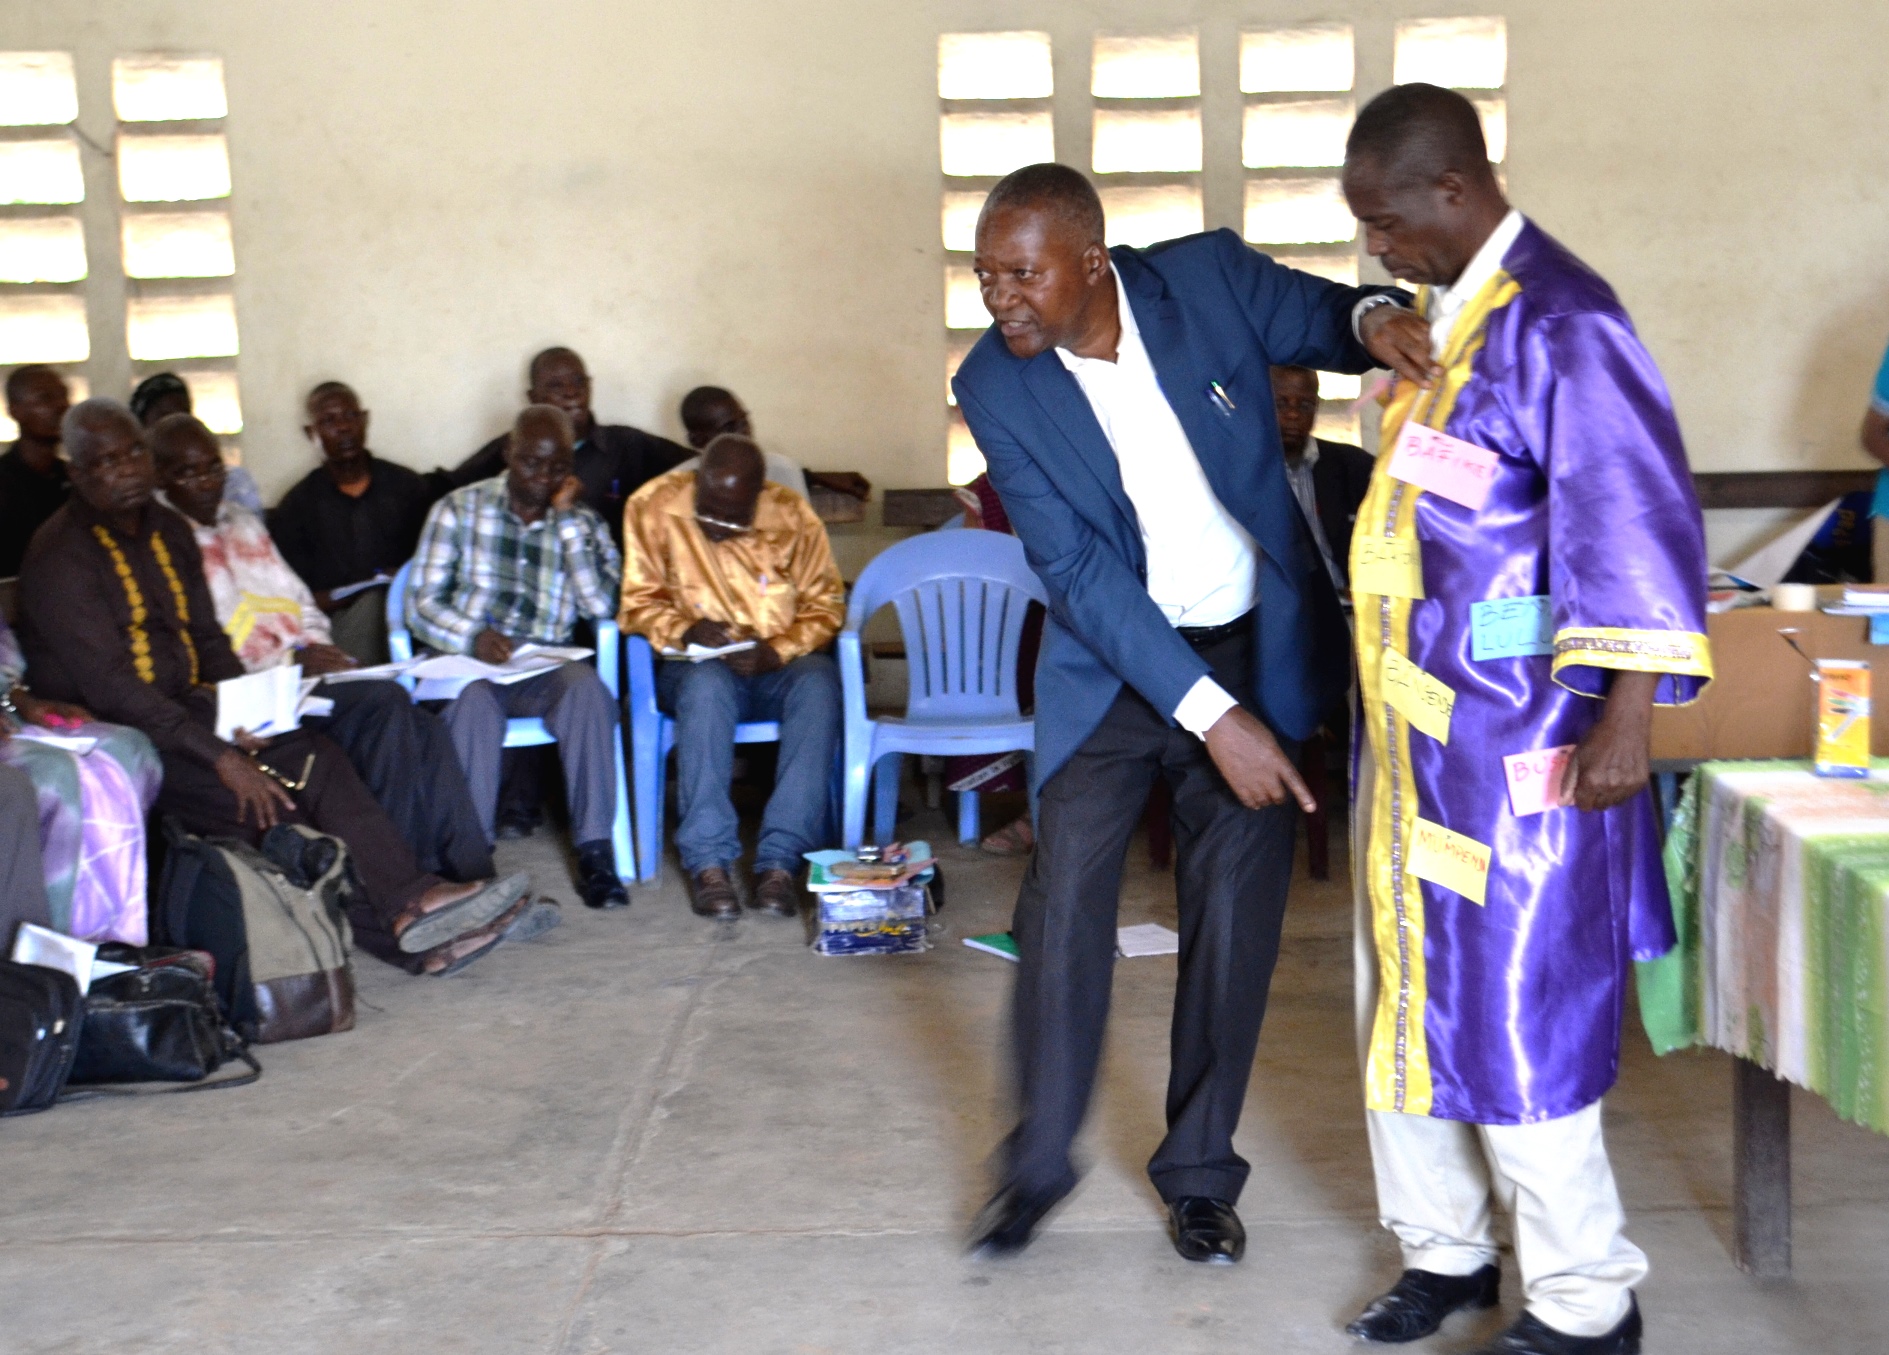 Pastor Mboyamba demonstrates the beauty of diversity